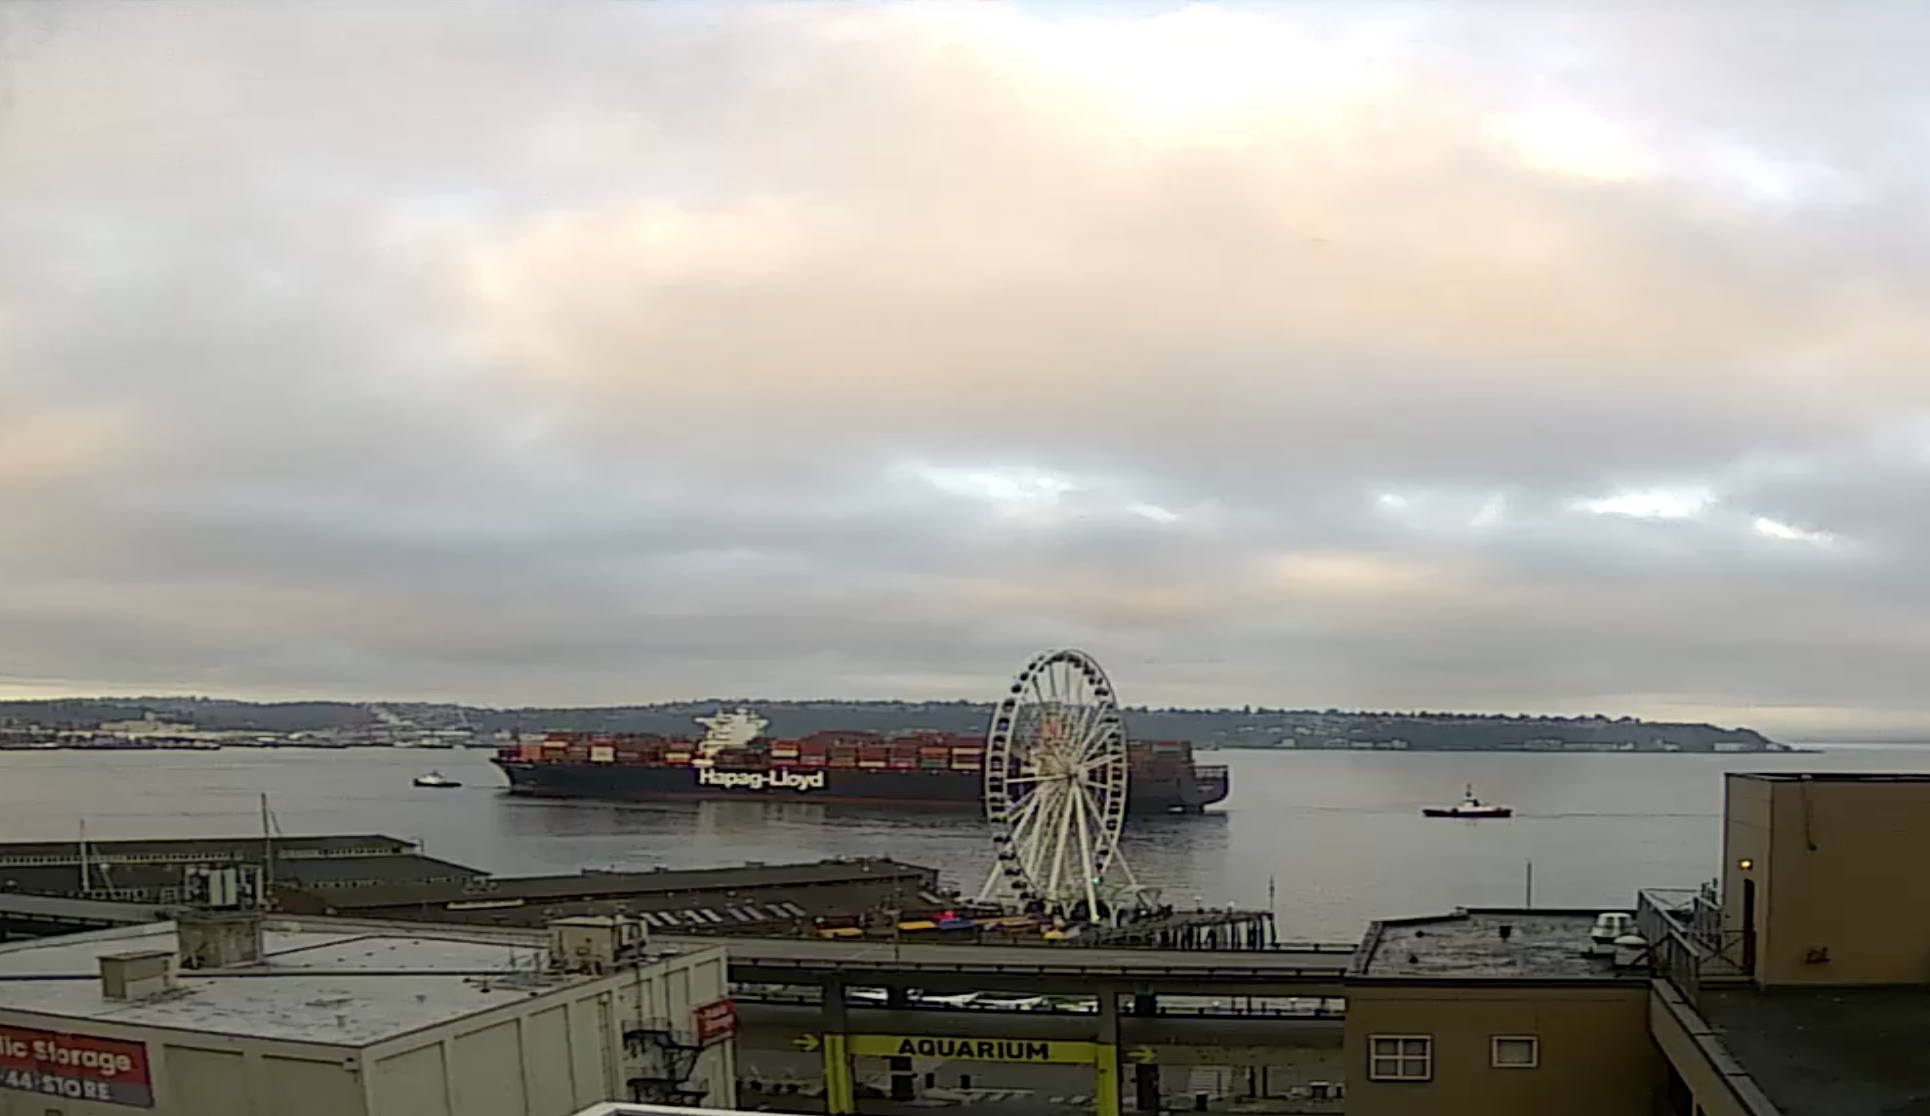 Seattle Waterfront Webcam SWW Hapaq-Lloyd Cargo Ship and Tug Boat 08 04 2018